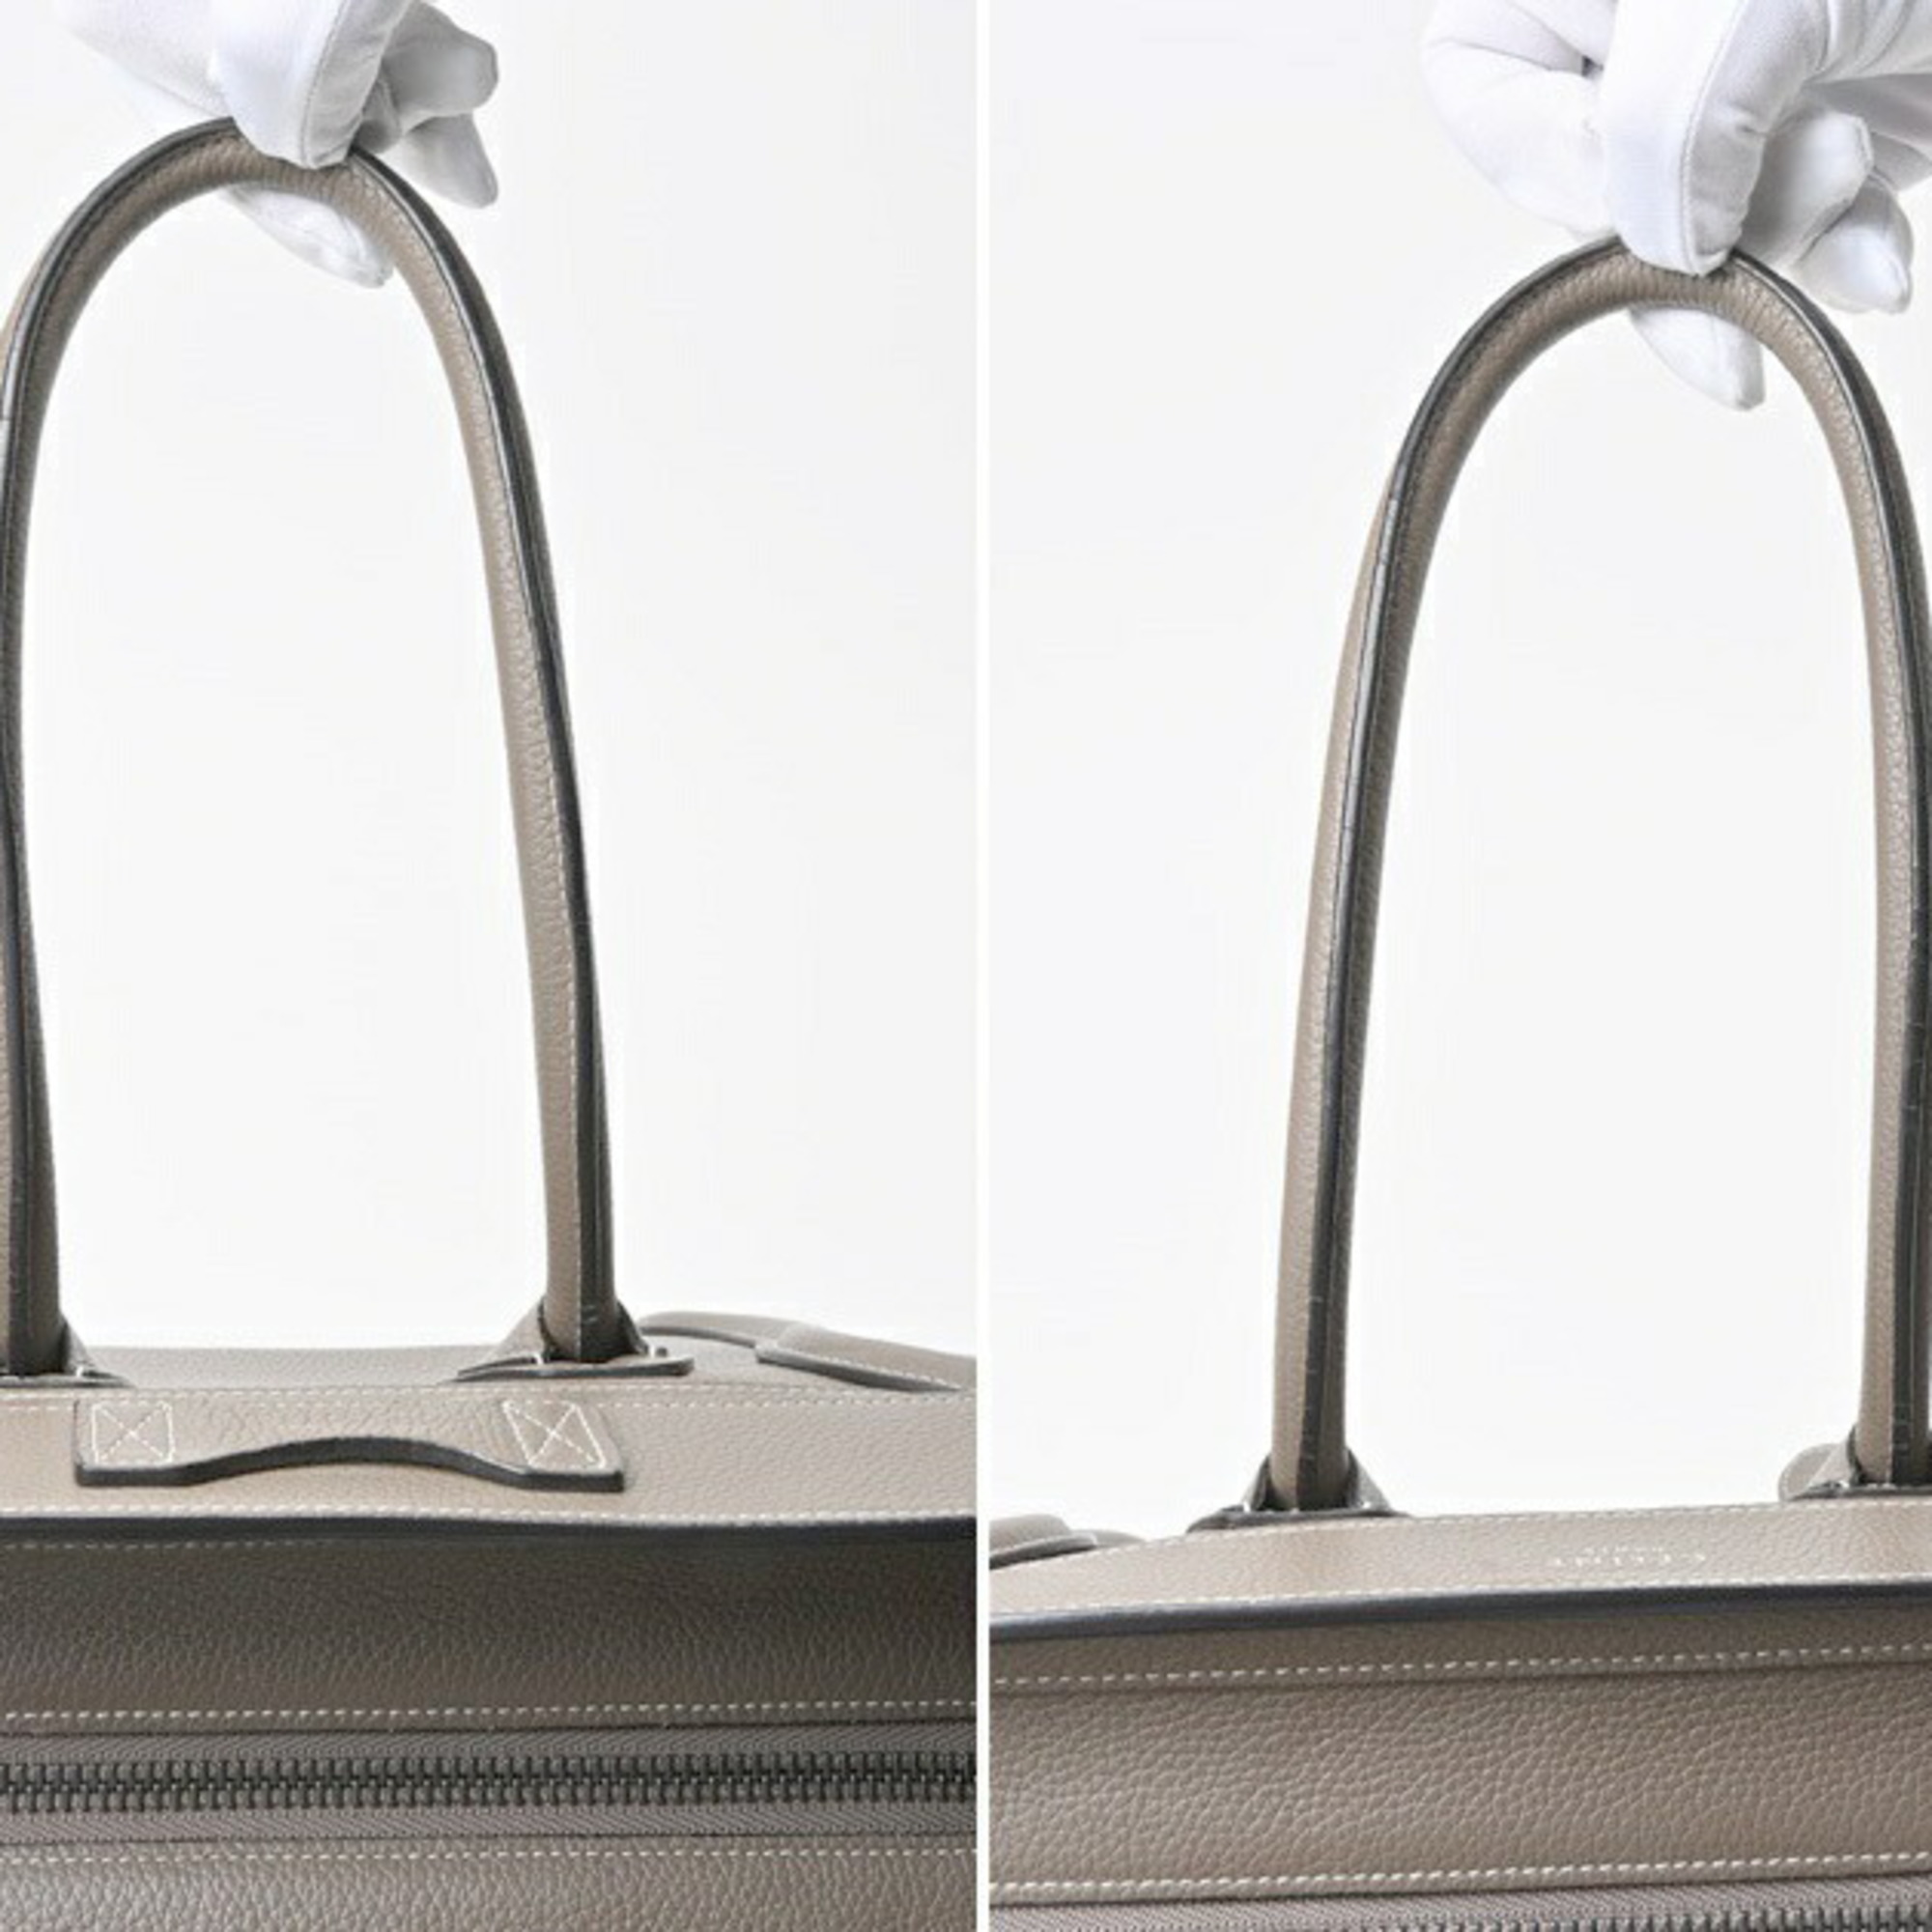 CELINE Luggage Micro Handbag 189793DRU.09SO 167793DRU.09SO Drummed Calfskin Suri (Greyish Beige) S-155662